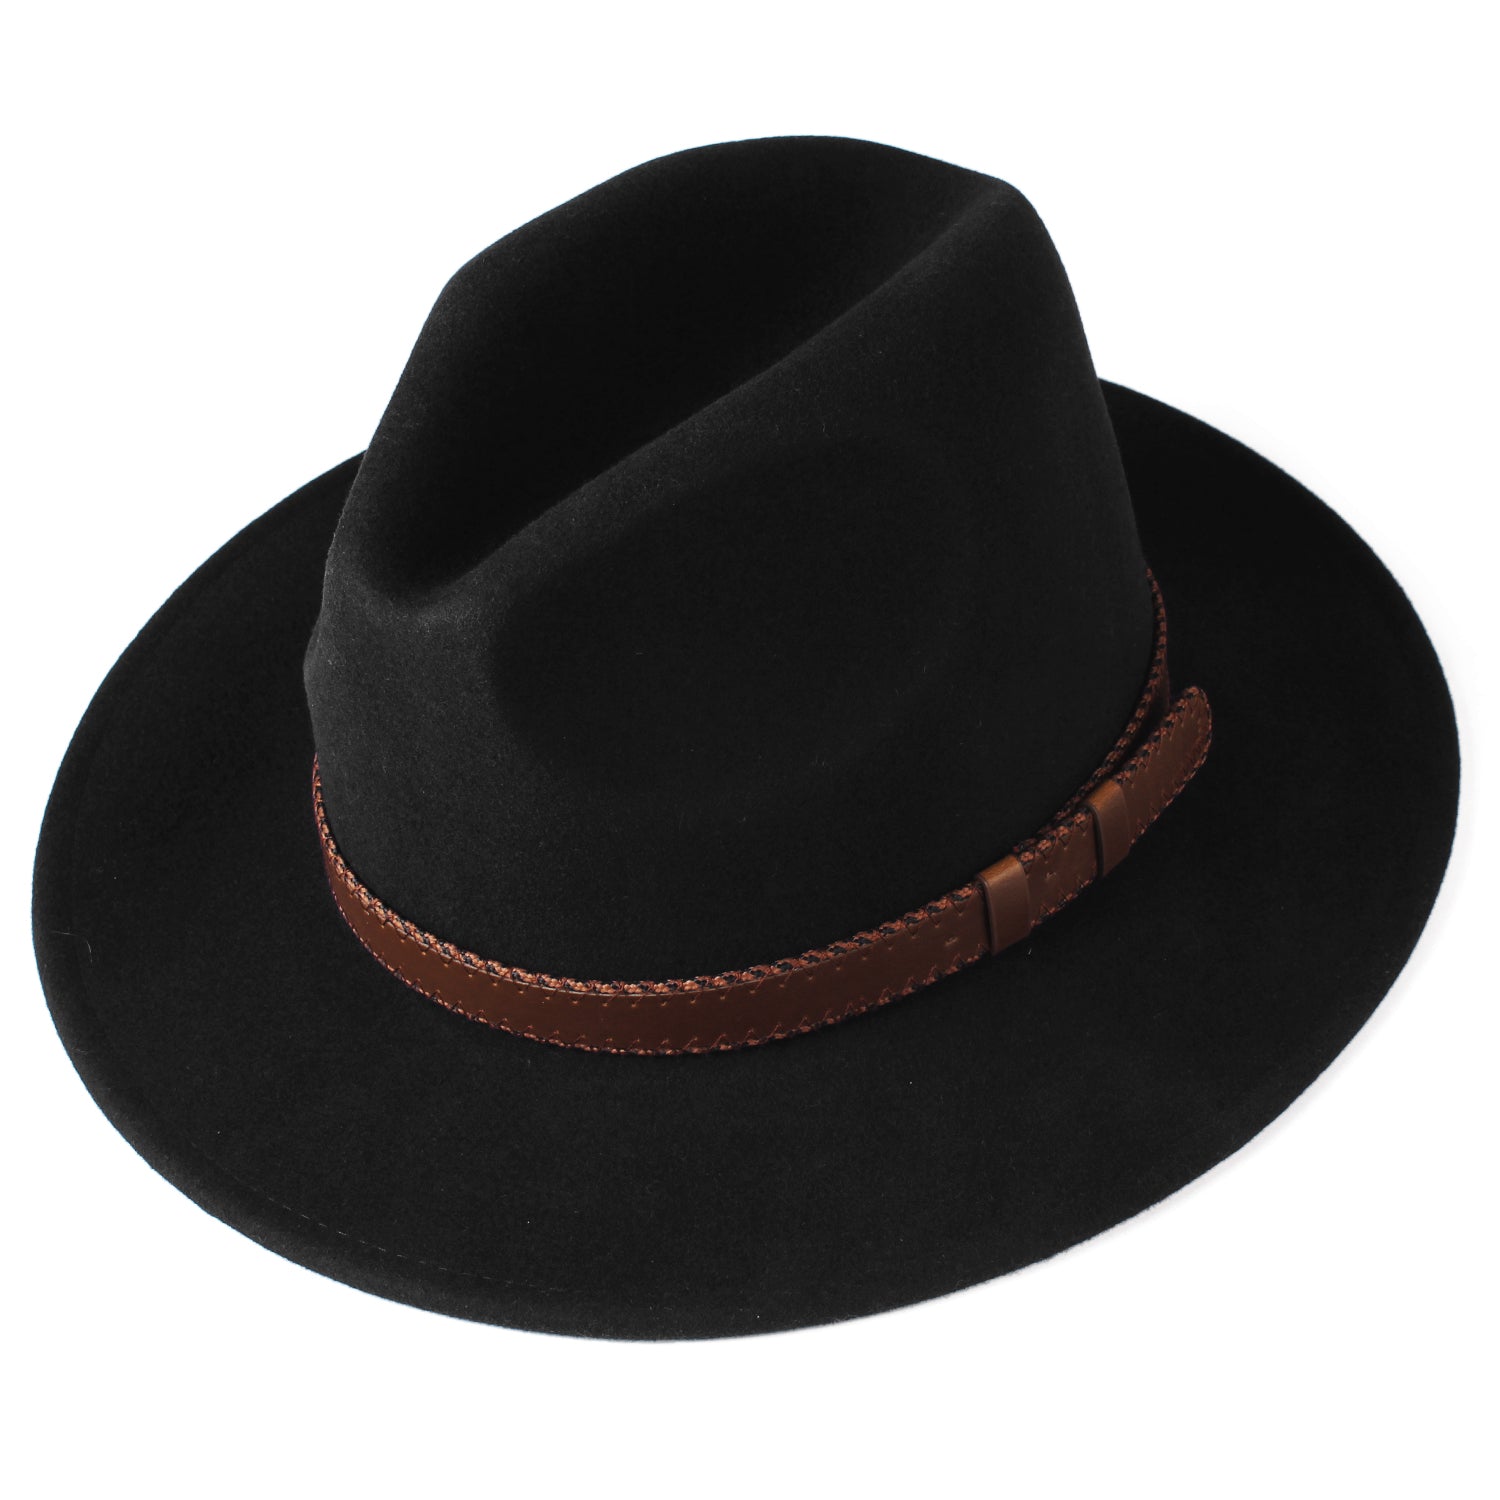 FURTALK Fedora Hats for Men Women 100% Australian Wool Felt Wide Brim